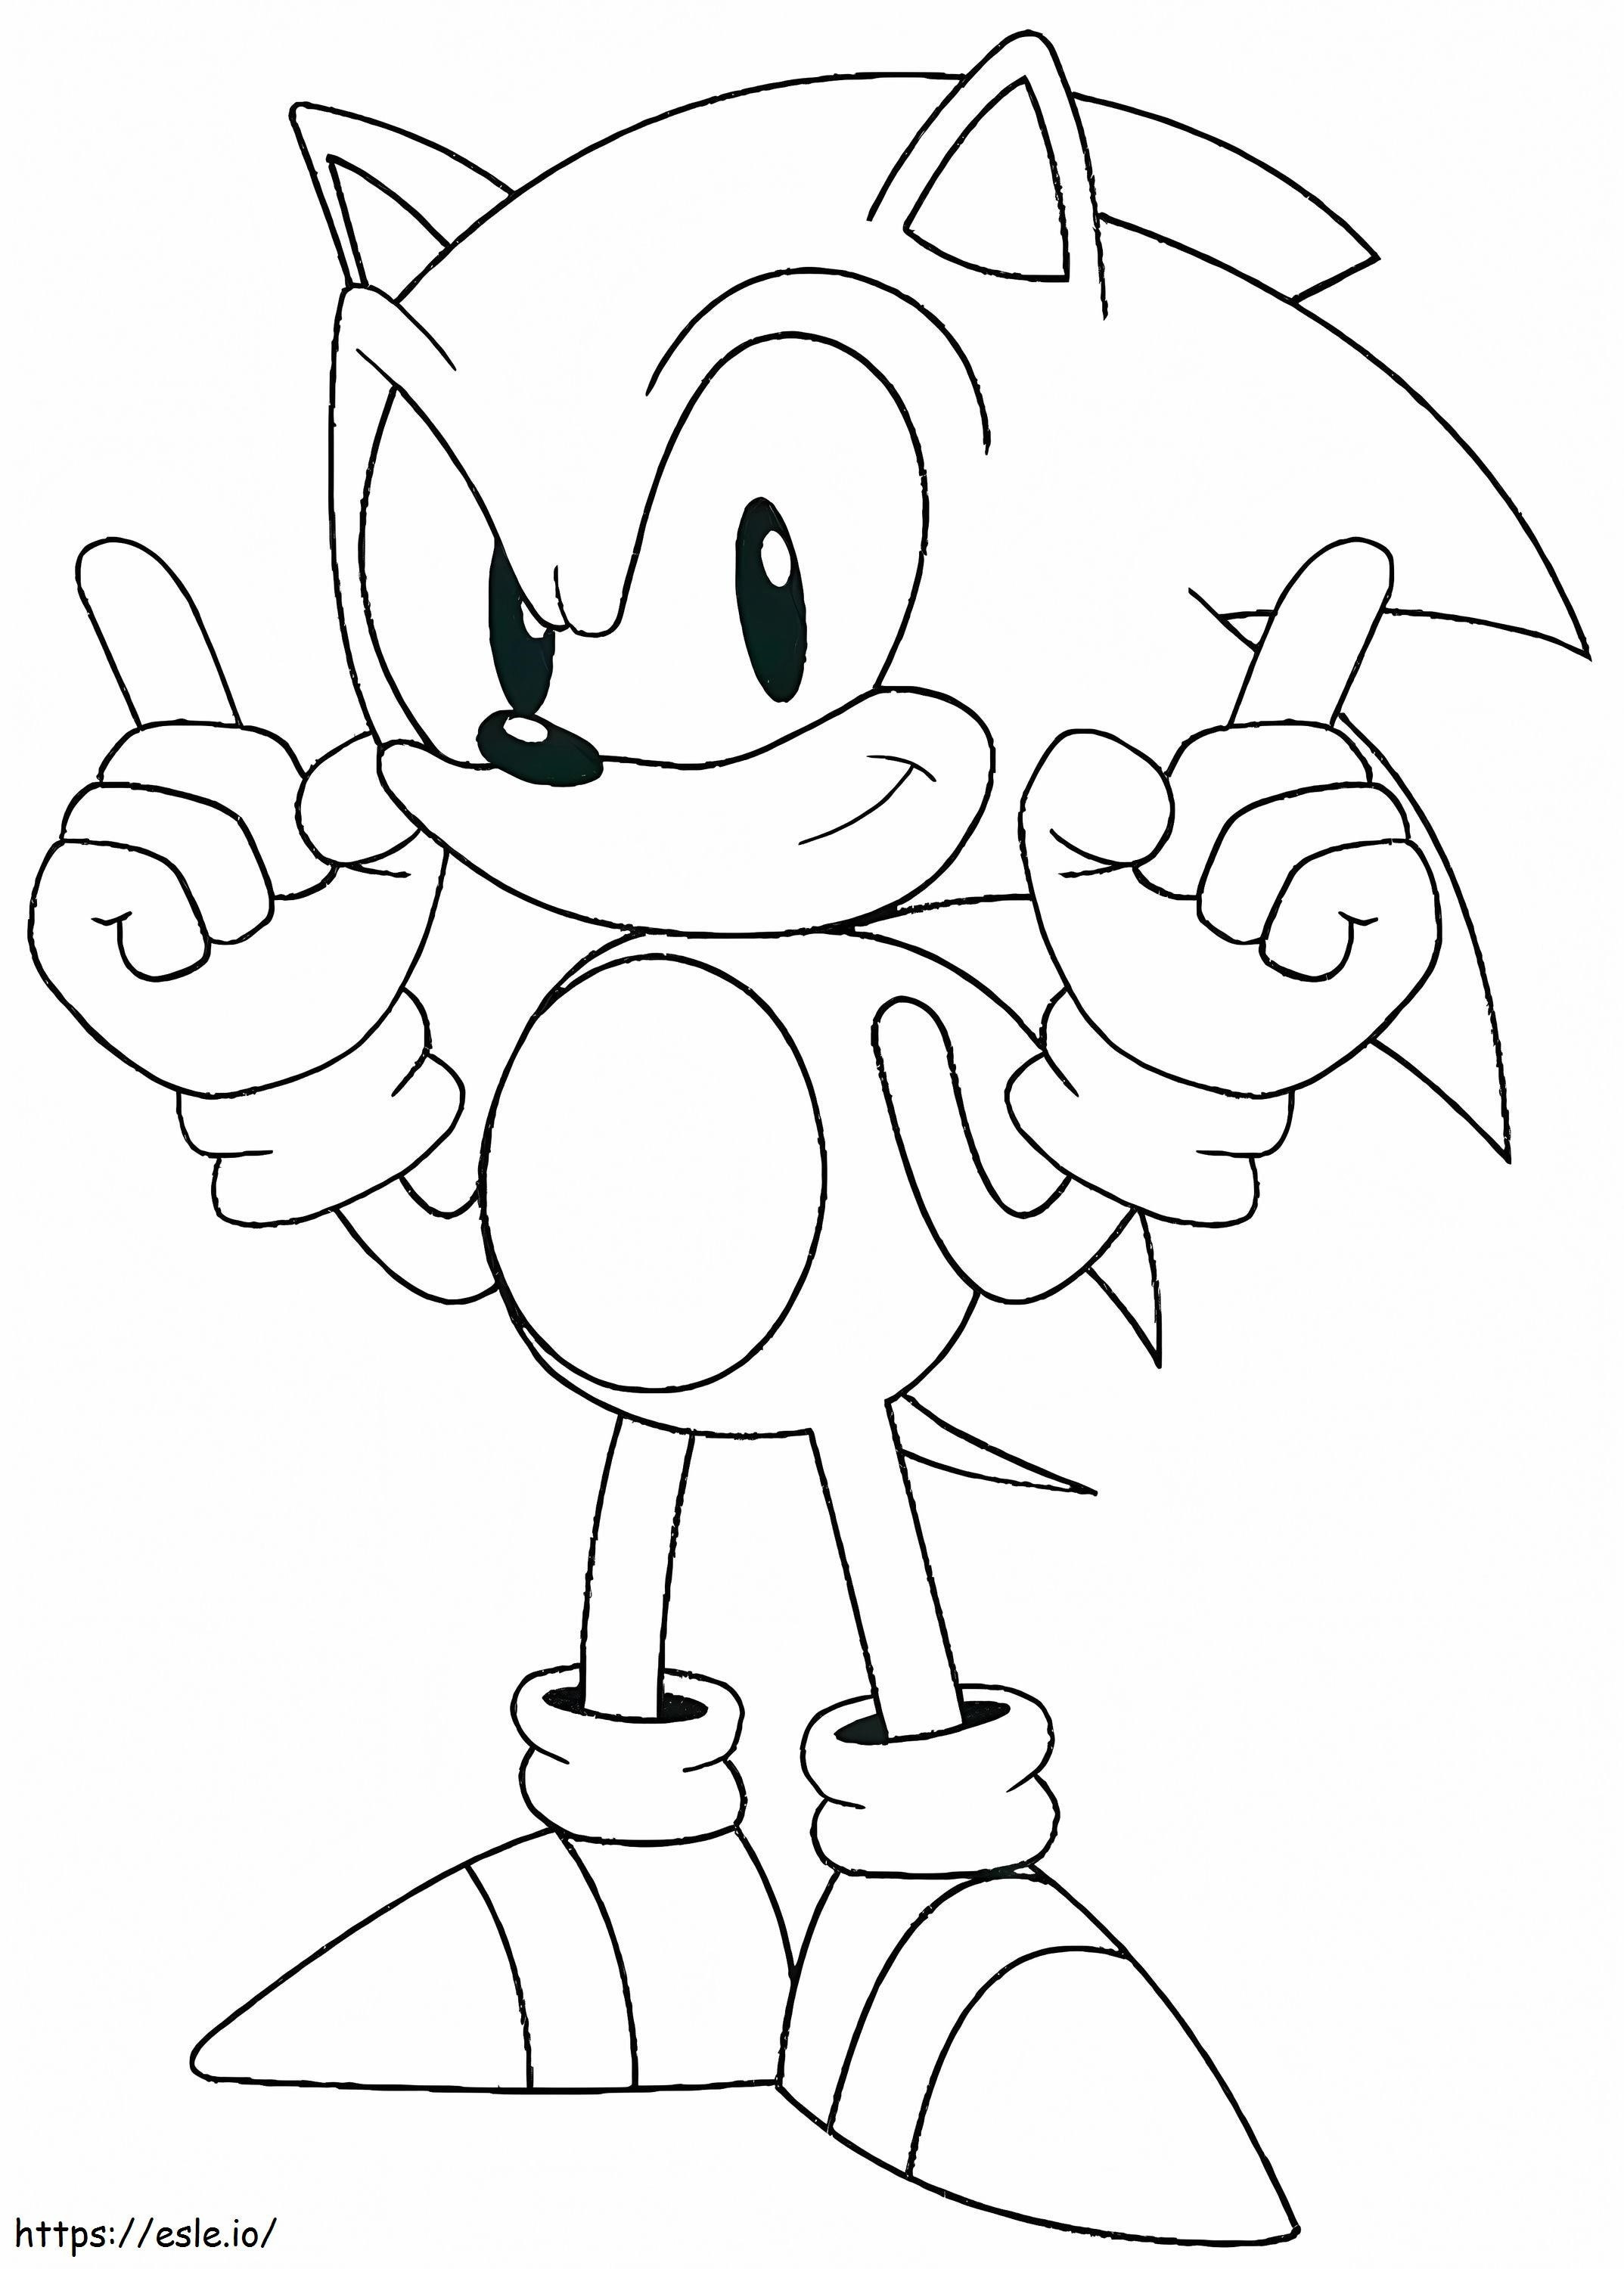  Gratis Sonic The Hedgehog de colorat